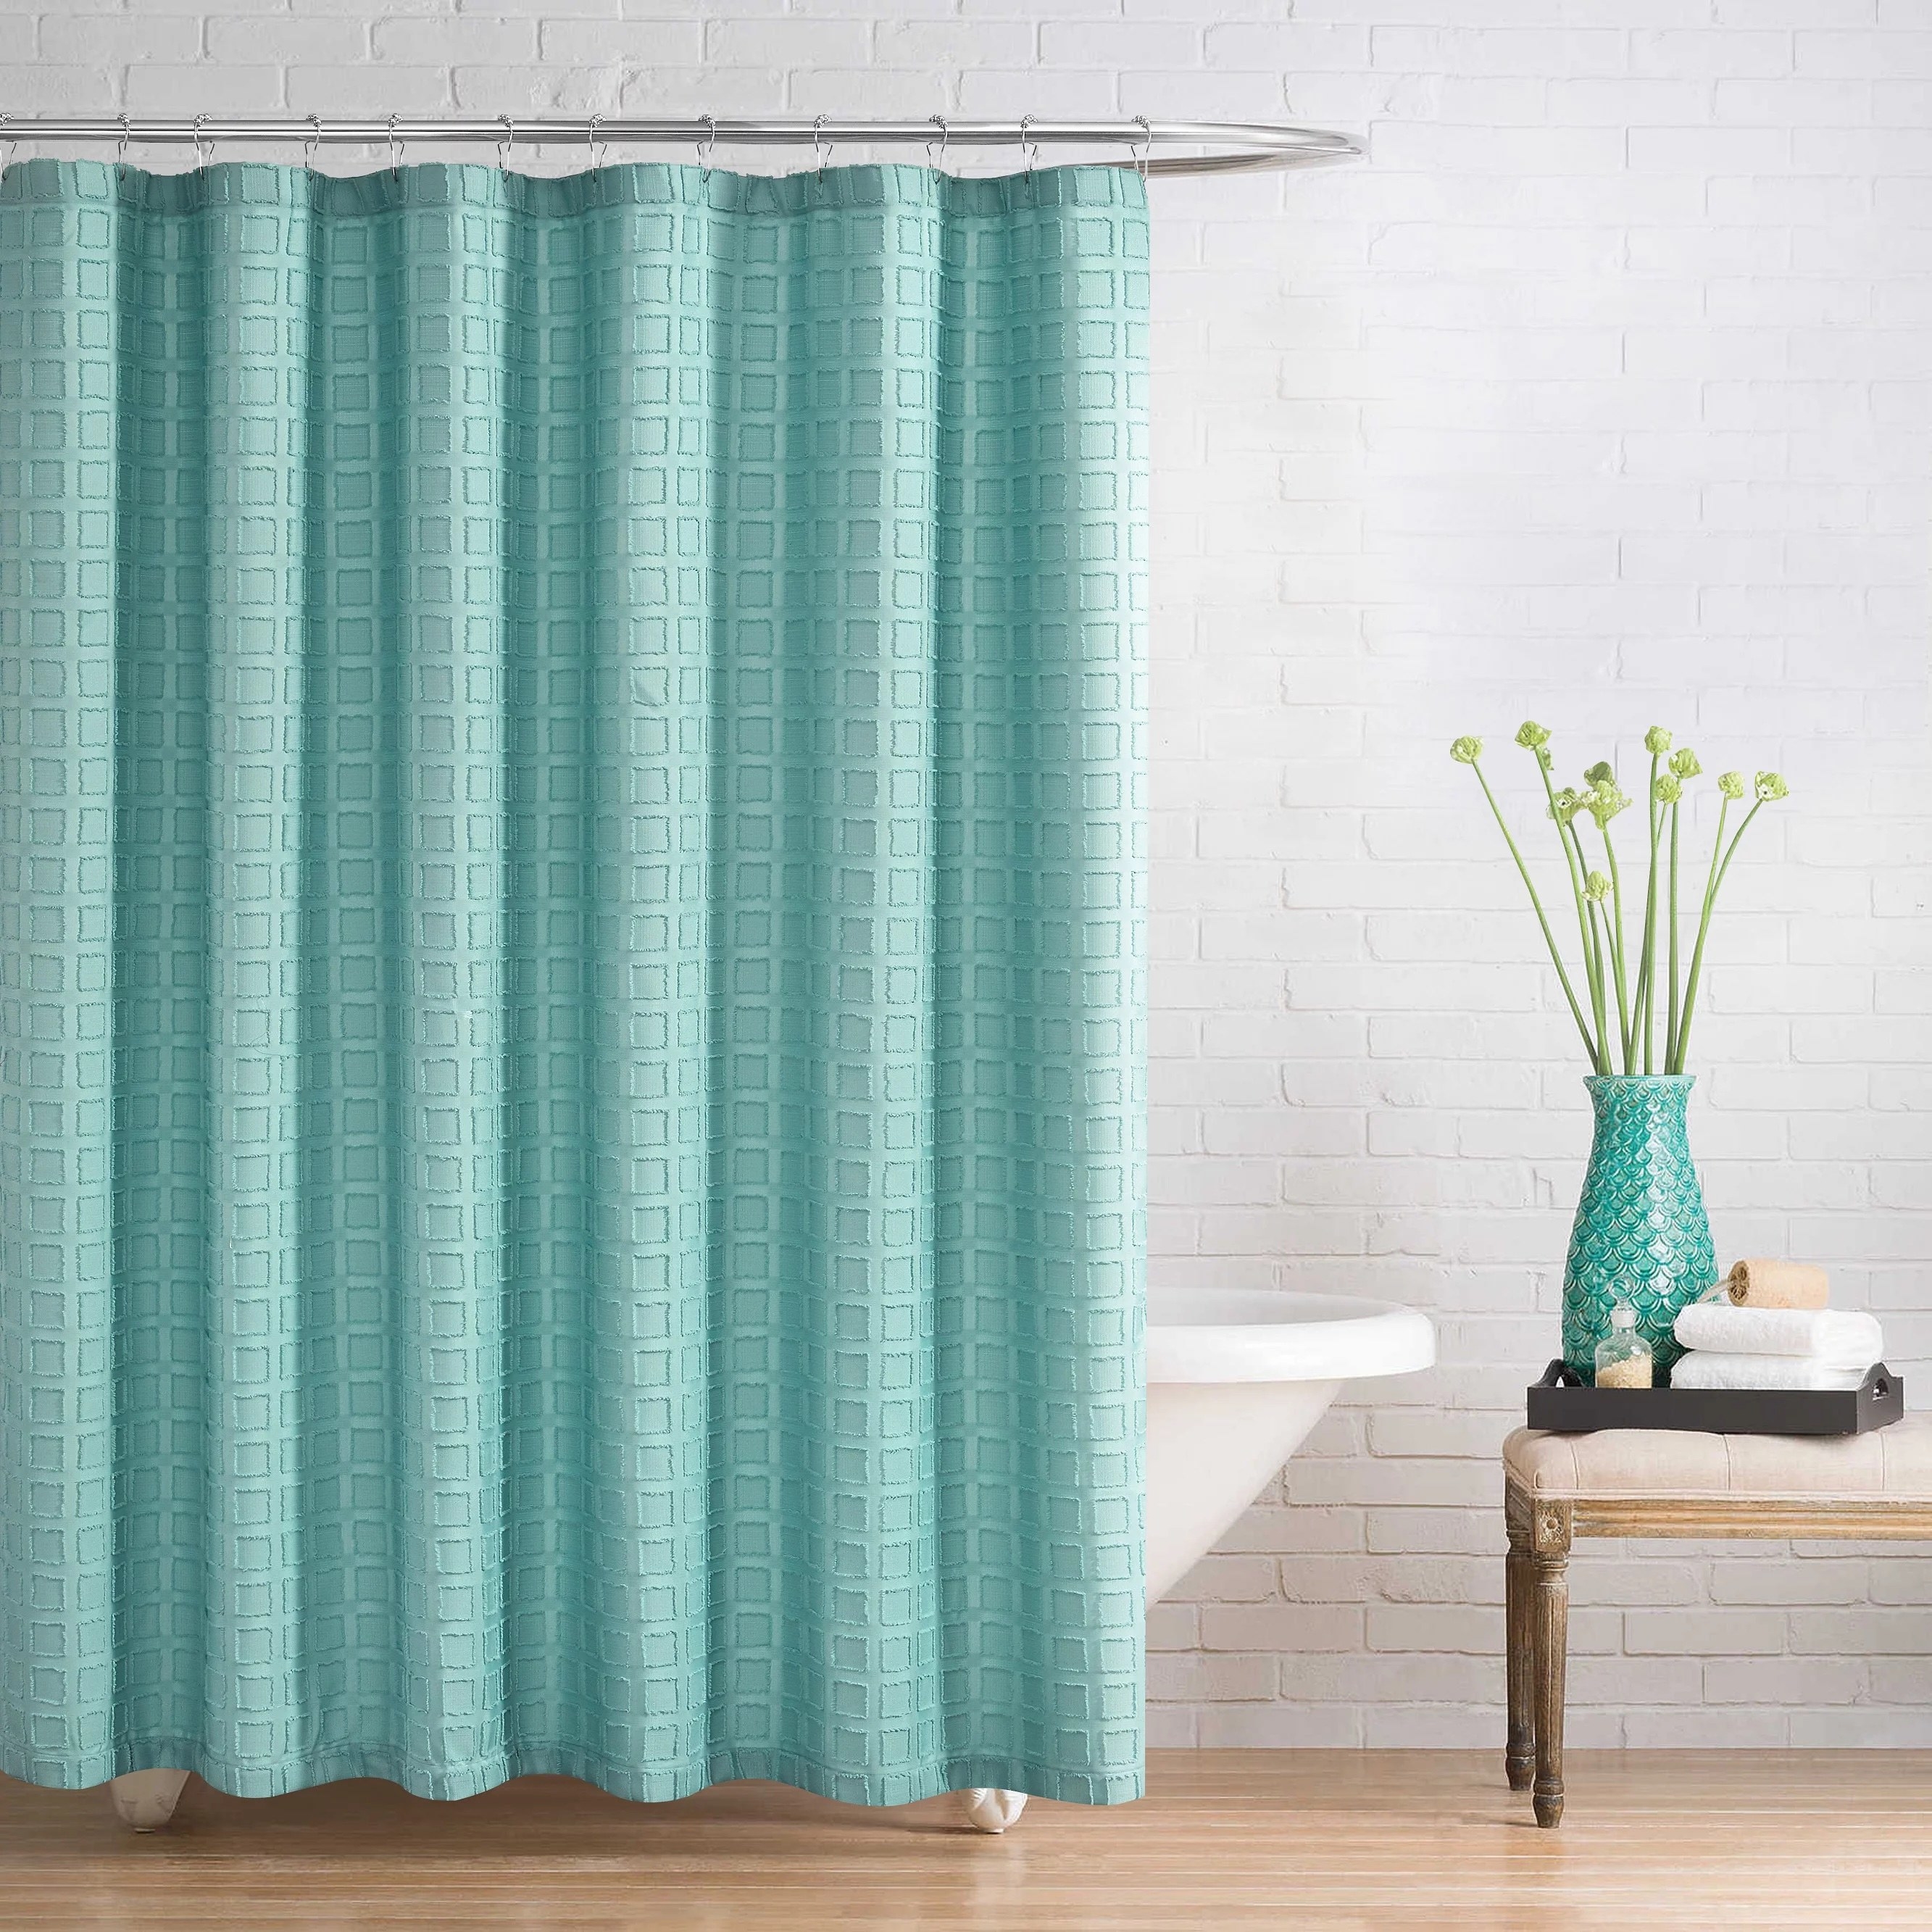 A blue shower curtain